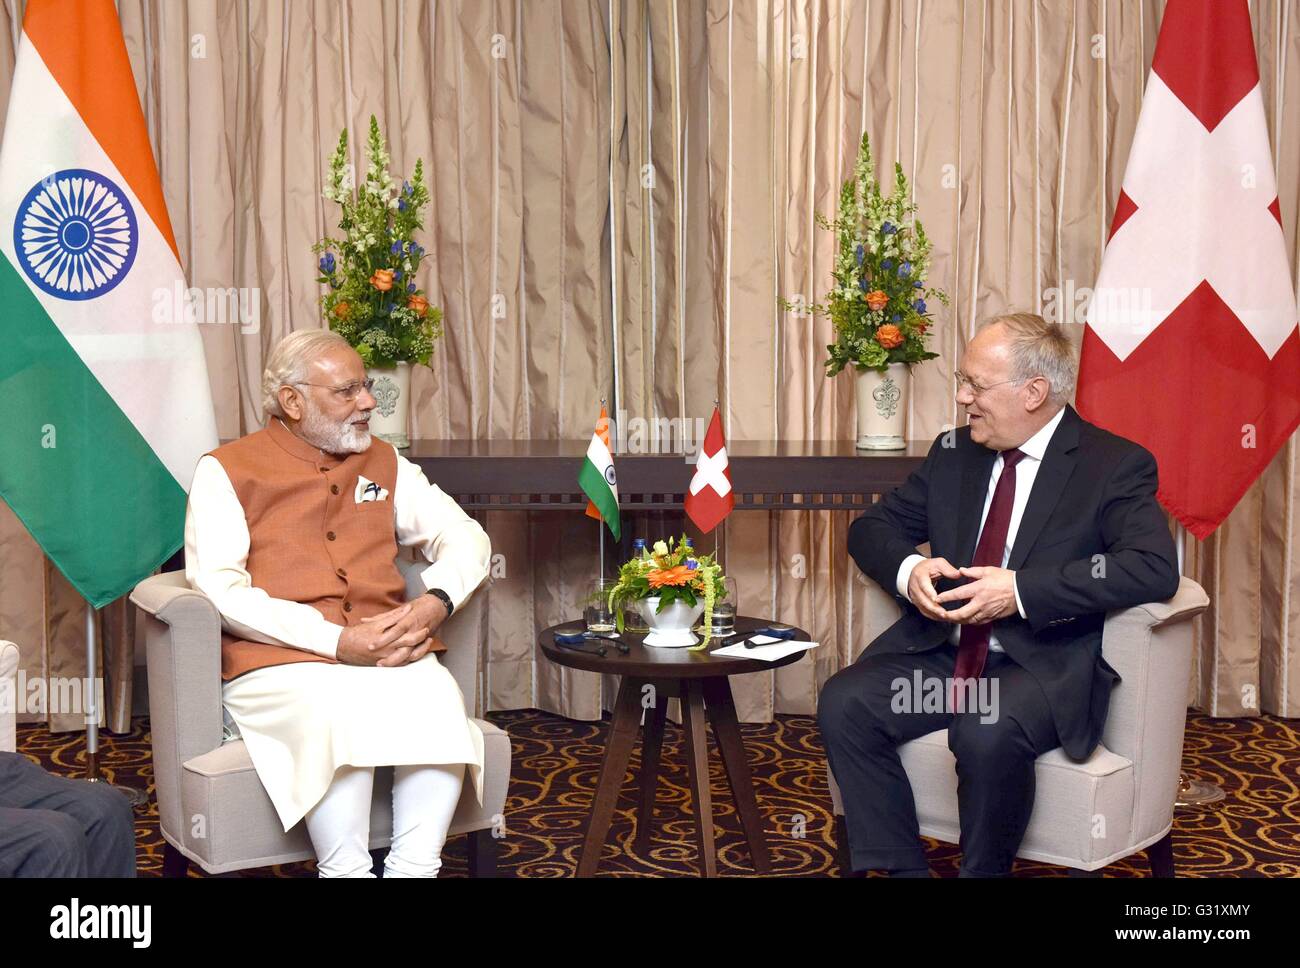 Swiss President Johann Schneider-Ammann during a bilateral meeting with Indian Prime Minister Narendra Modi June 6, 2016 in Geneva, Switzerland. Stock Photo